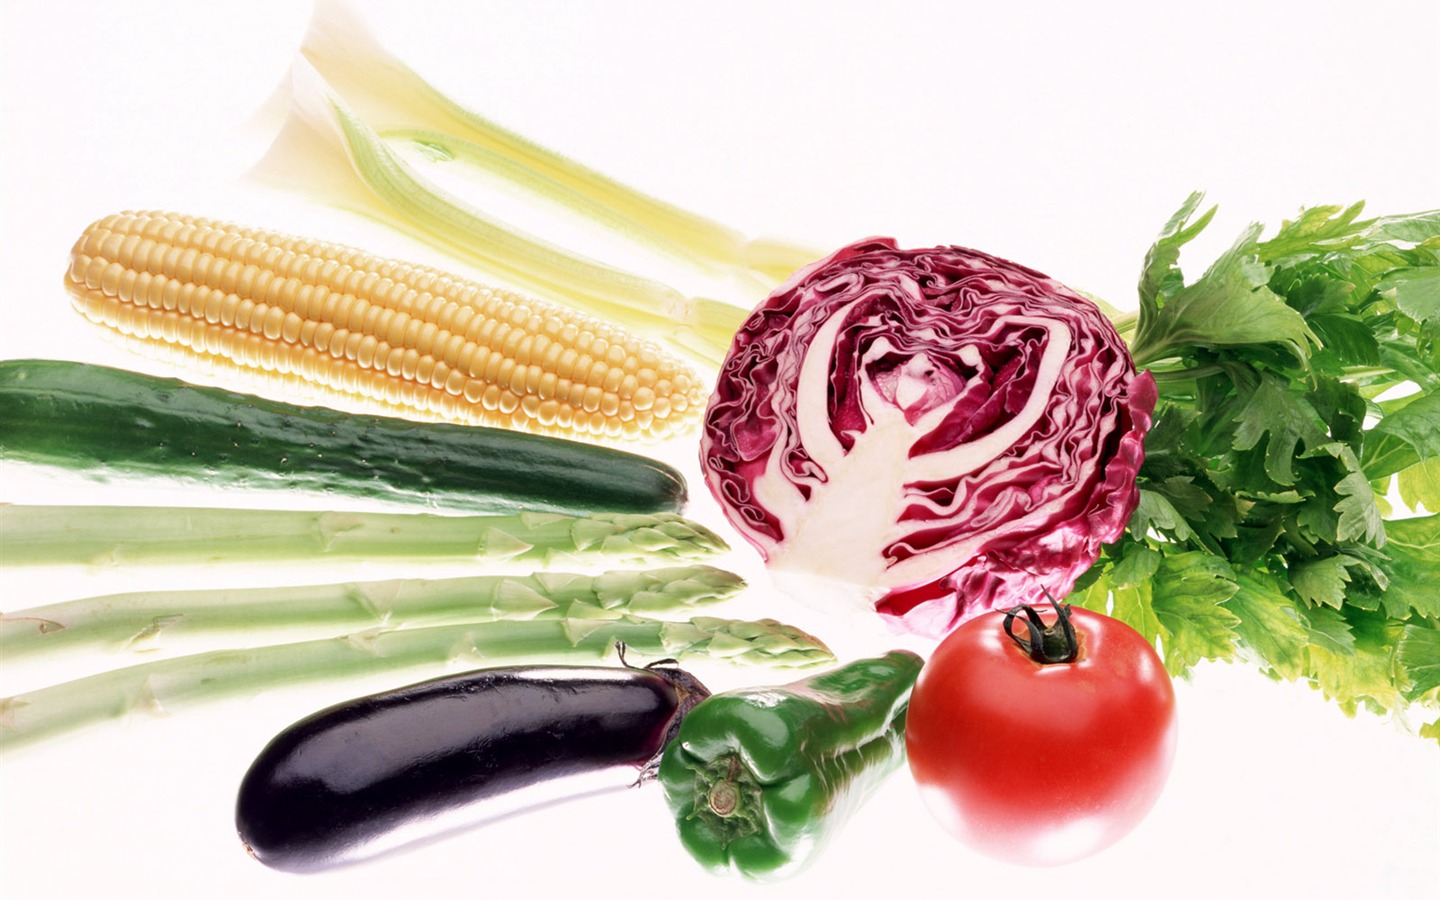 Fond d'écran photo de légumes (1) #17 - 1440x900